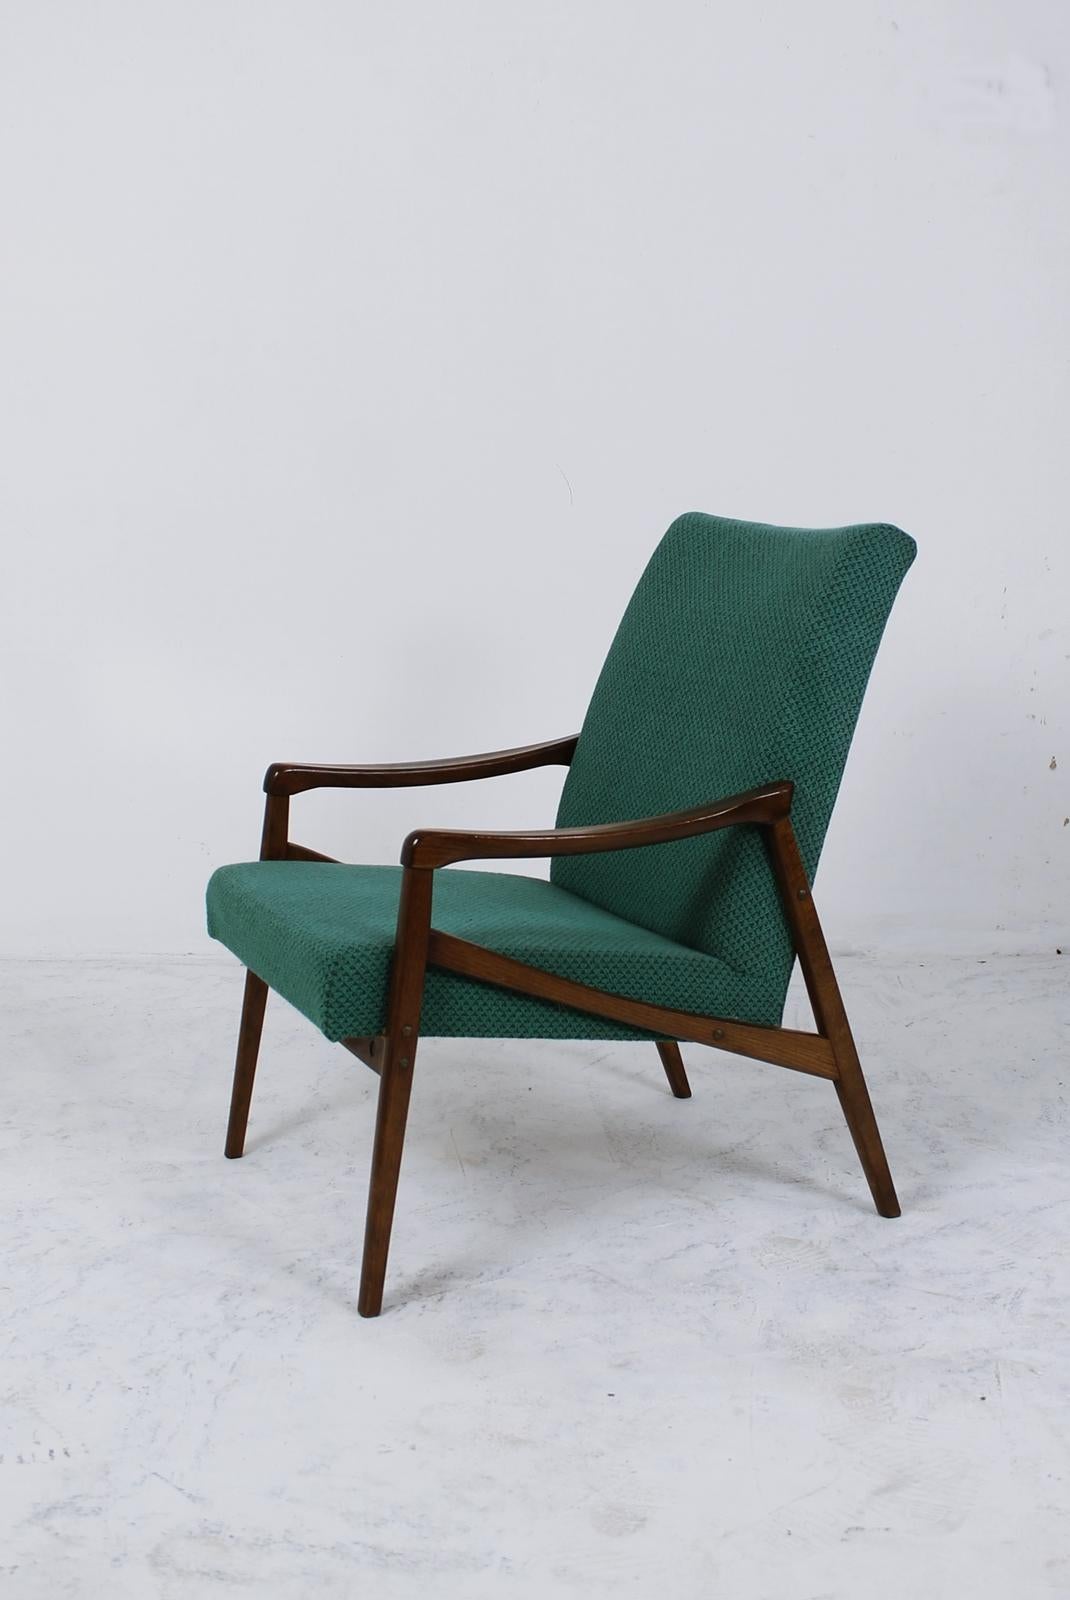 20th Century Mid-Century Modern Lounge Chair by Jiří Jiroutek for Interier Praha